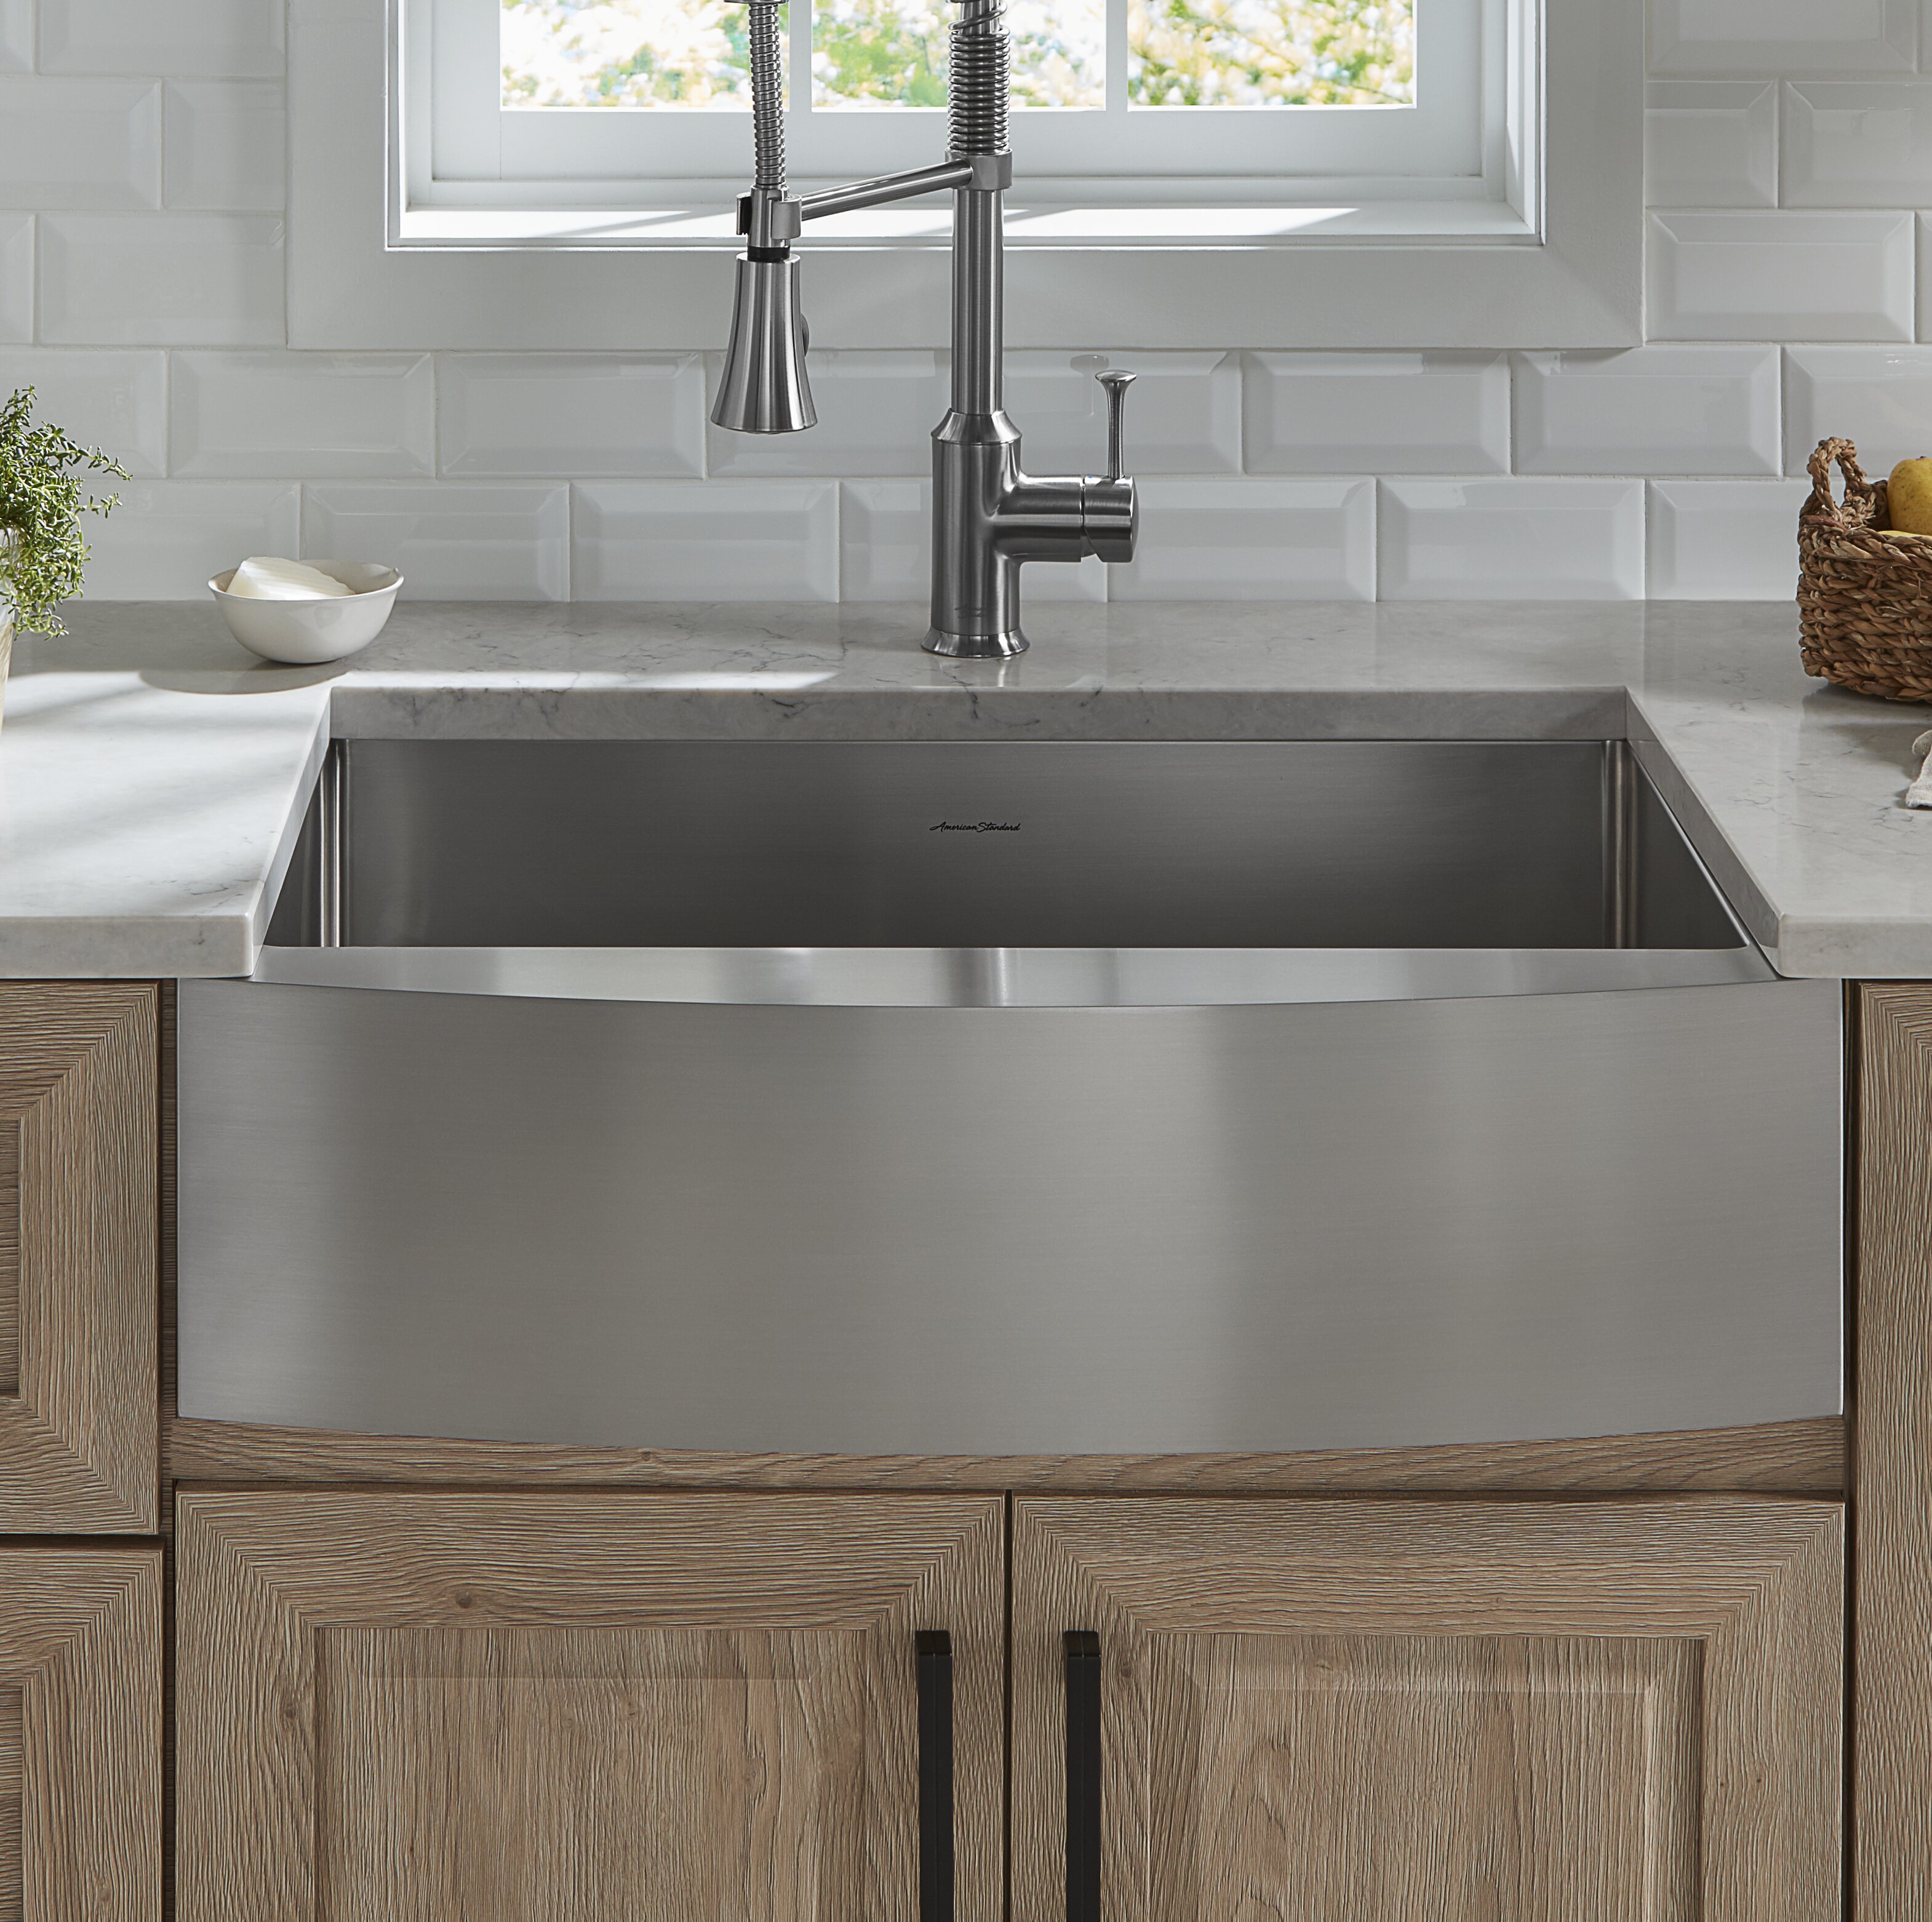 American Standard Pekoe 30" L x 22" W Farmhouse/Apron Kitchen Sink with